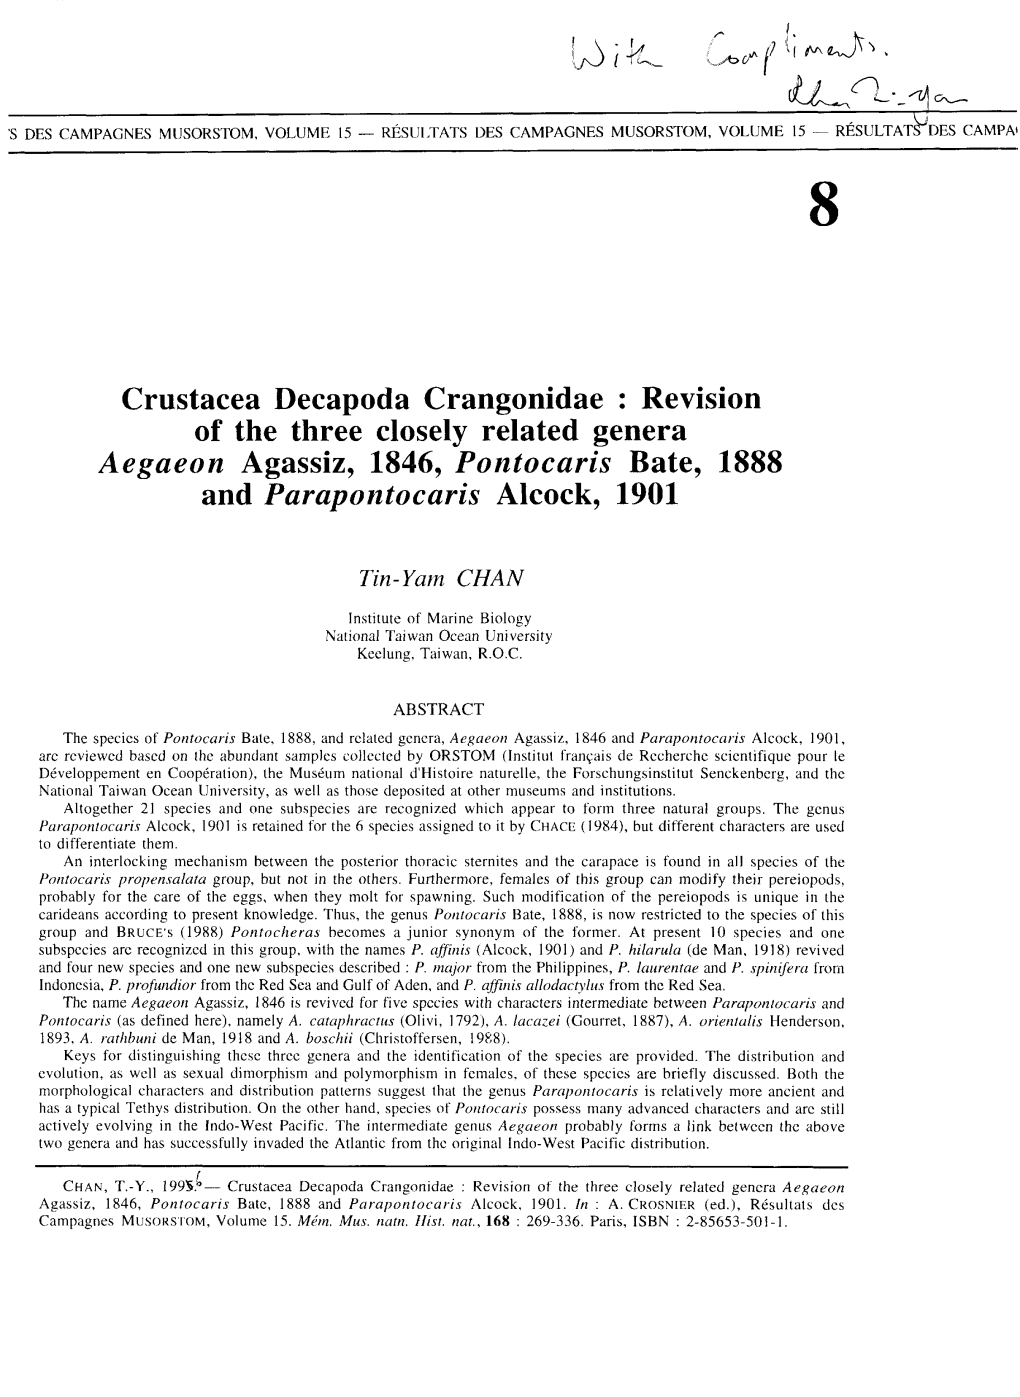 Crustacea Decapoda Crangonidae : Revision of the Three Closely Related Genera Aegaeon Agassiz, 1846, Pontocaris Bate, 1888 and Parapontocaris Alcock, 1901